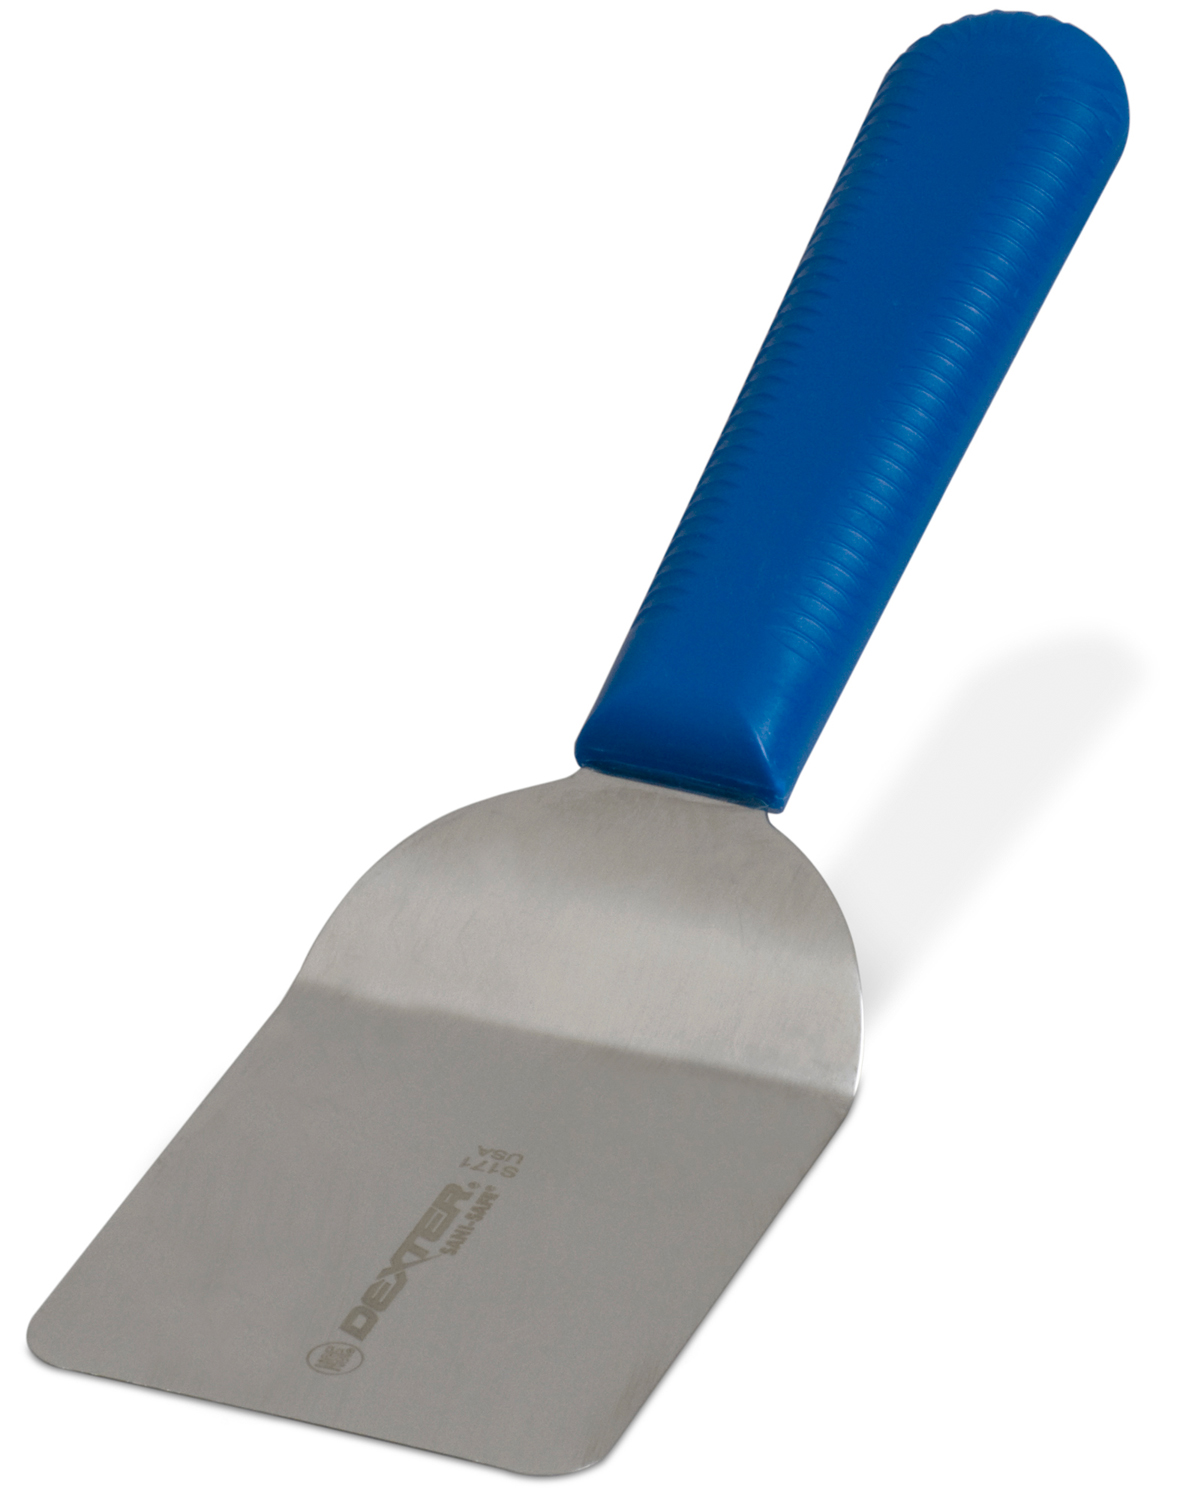 mini turner spatula